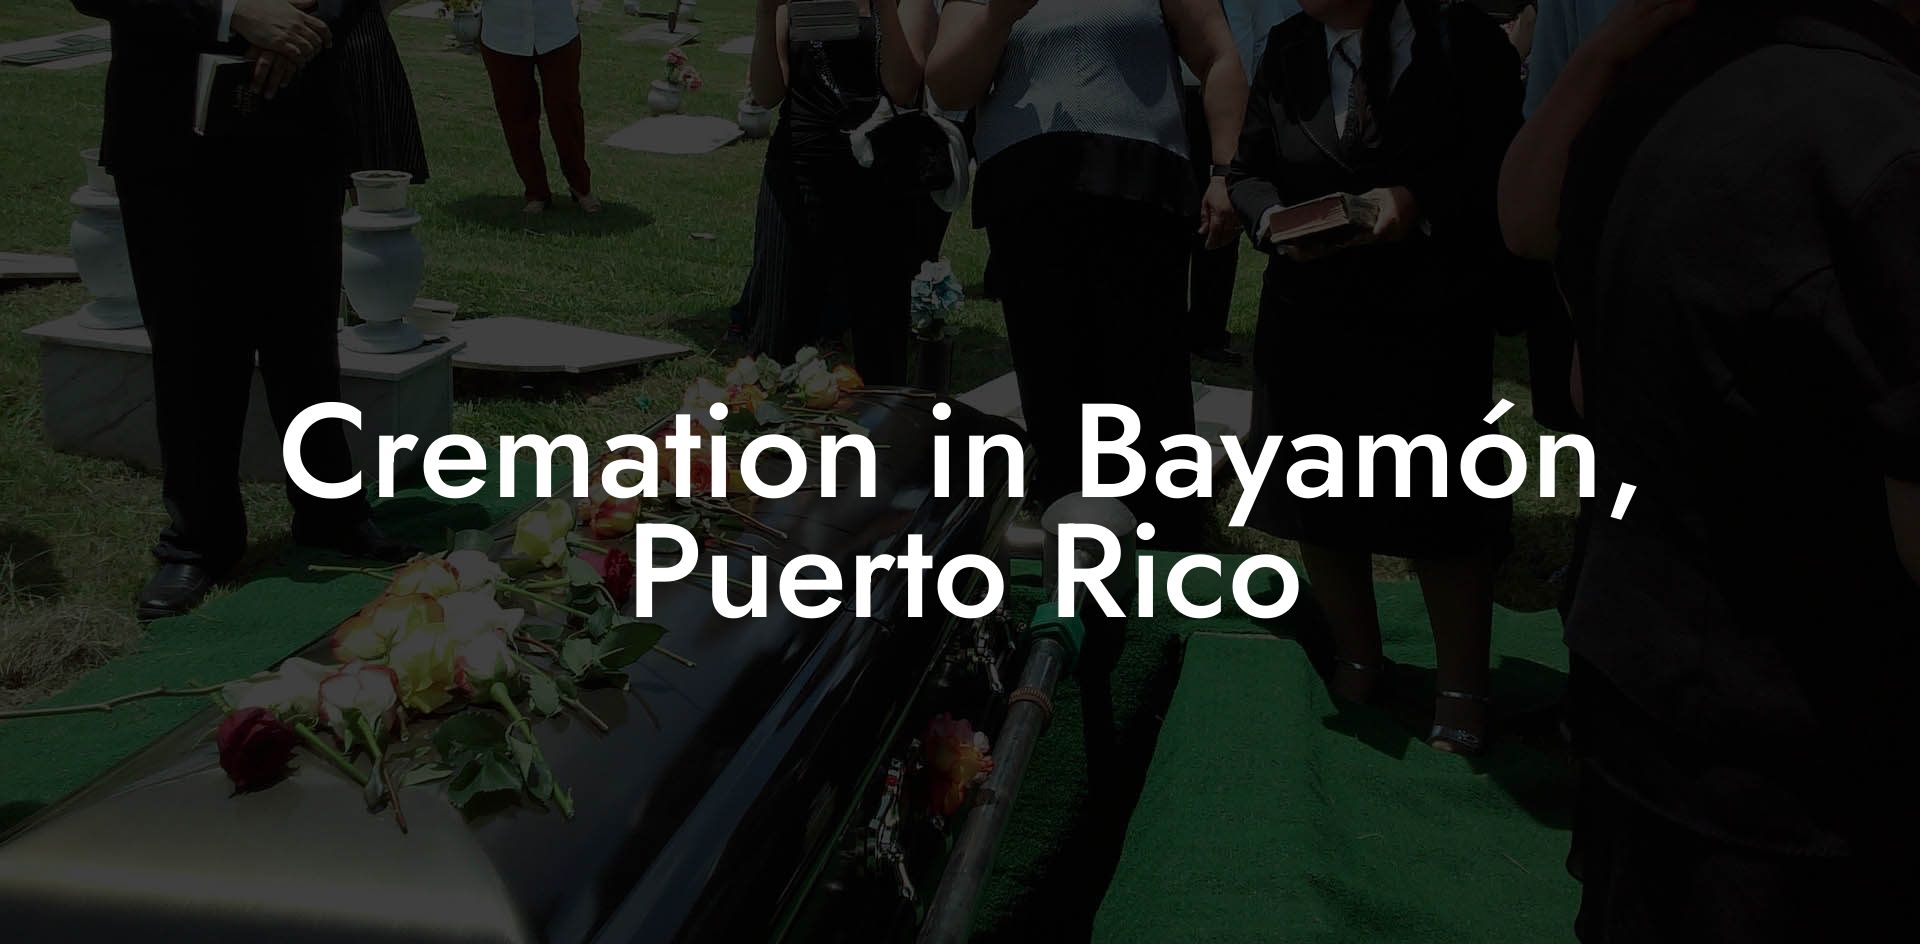 Cremation in Bayamón, Puerto Rico